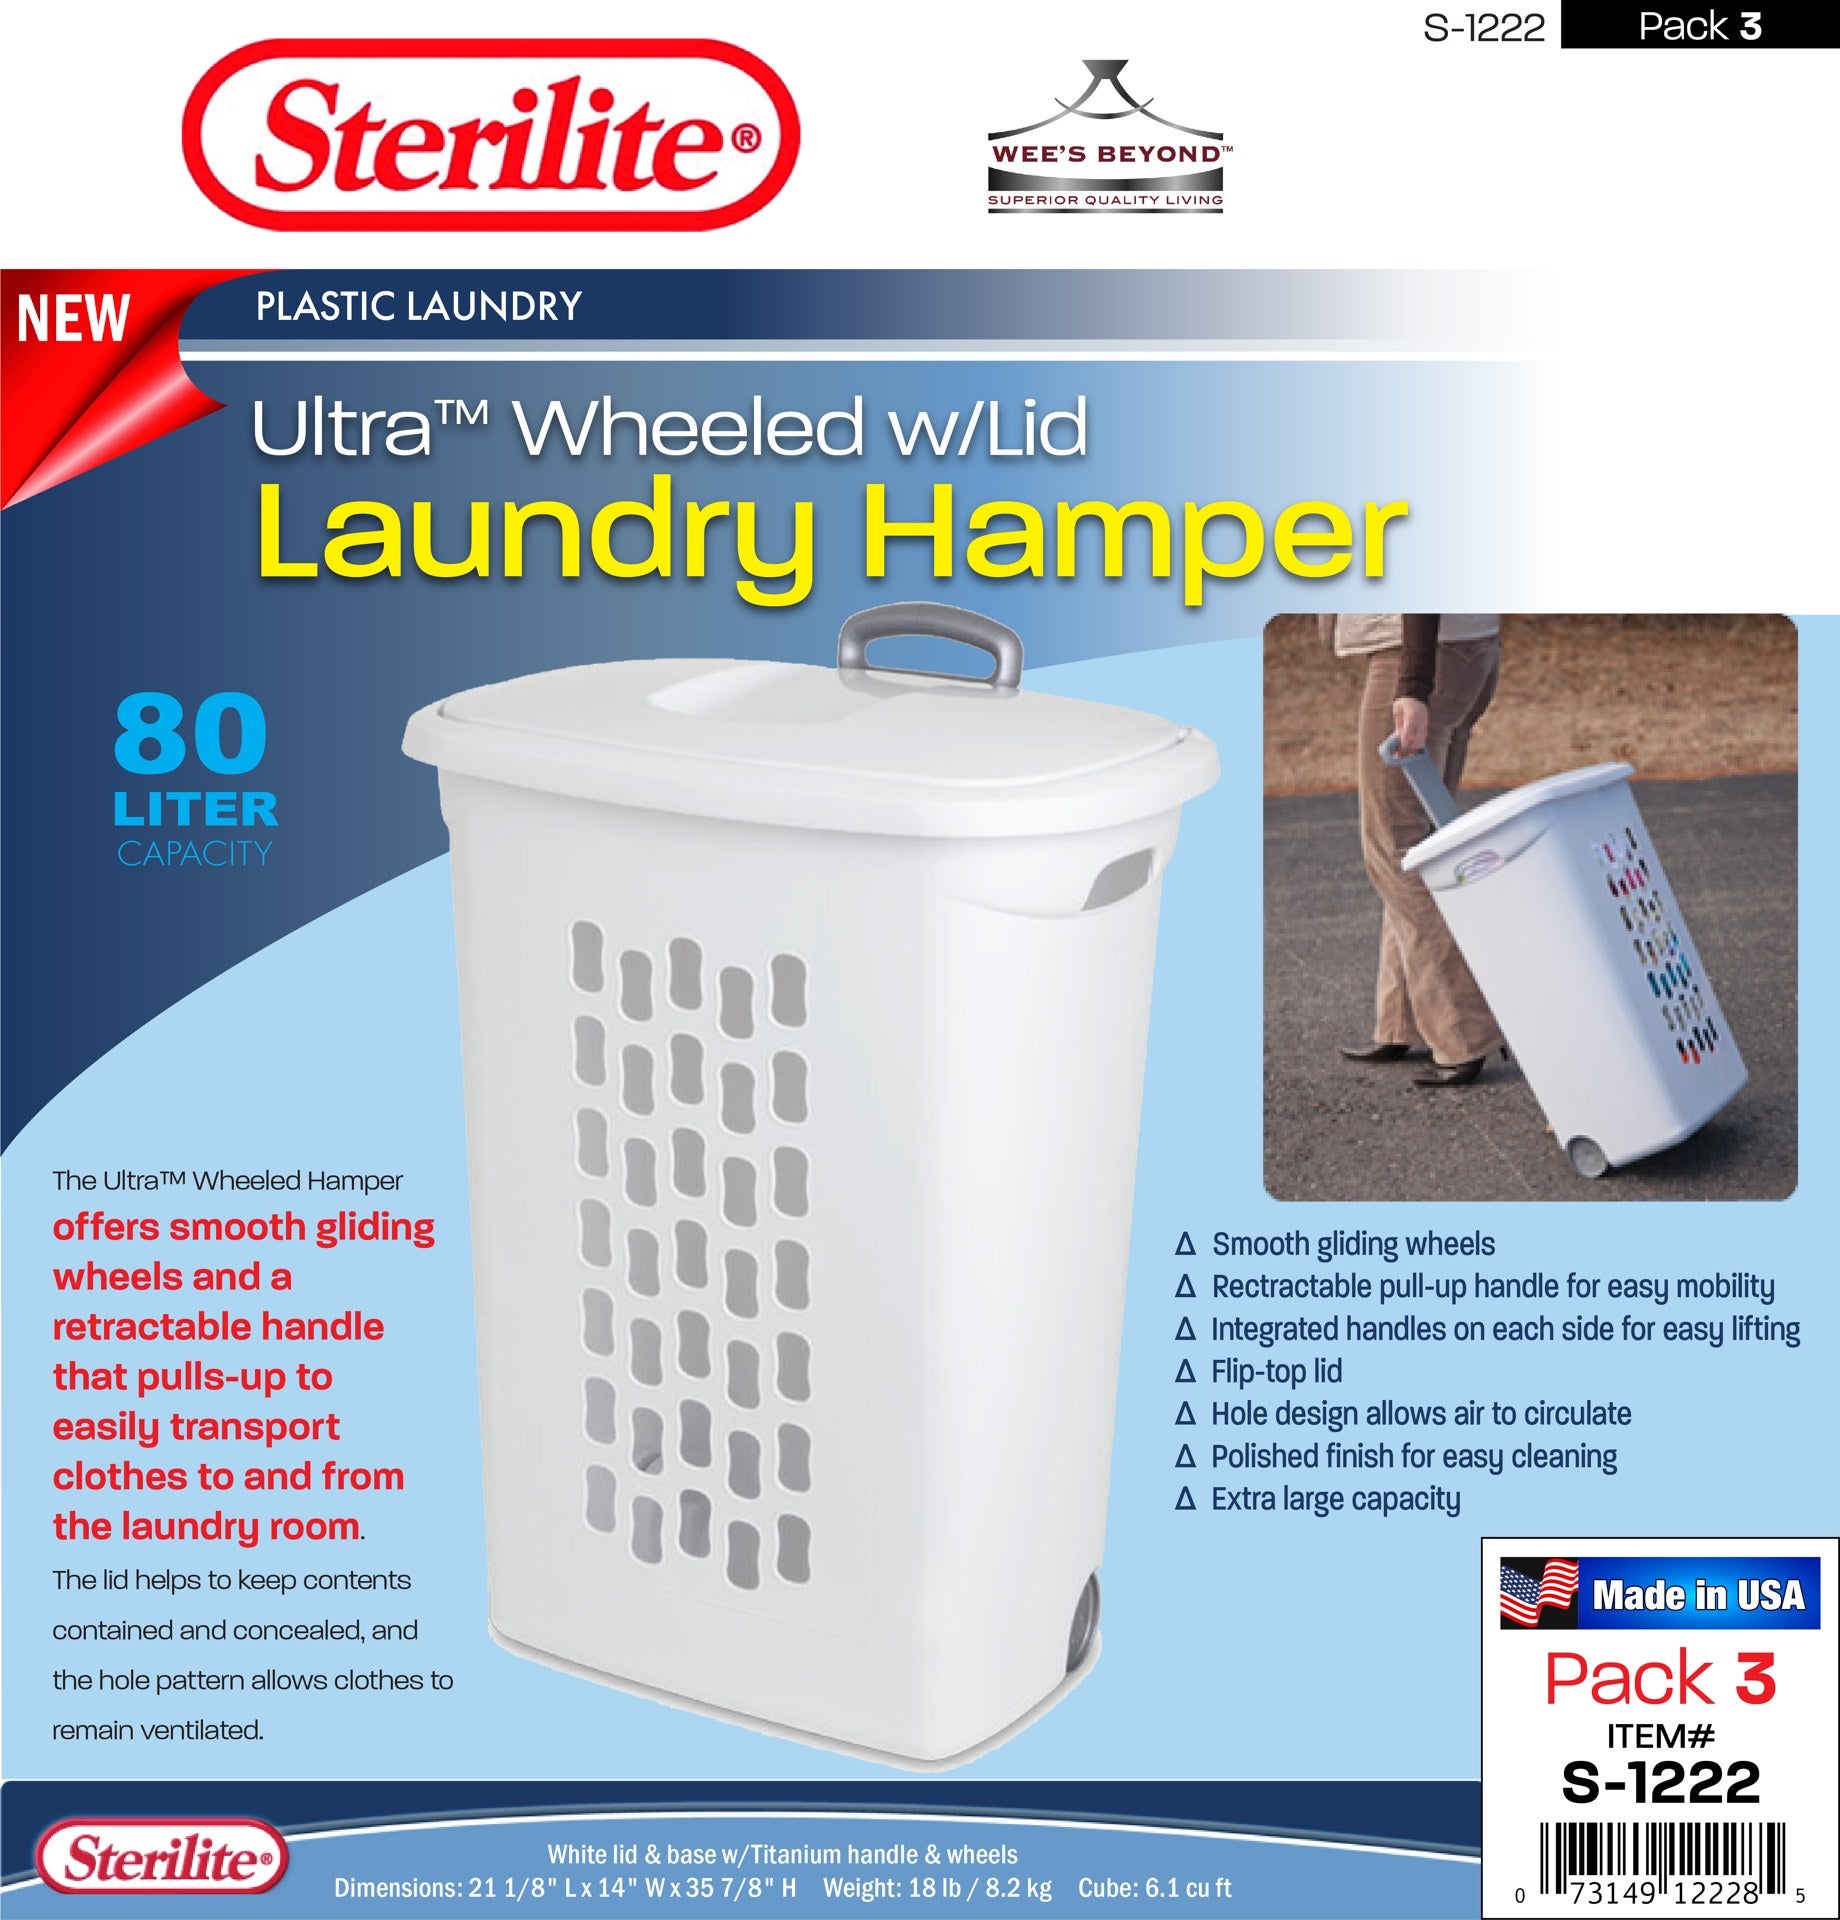  Sterilite Plastic Laundry Hamper with Handles